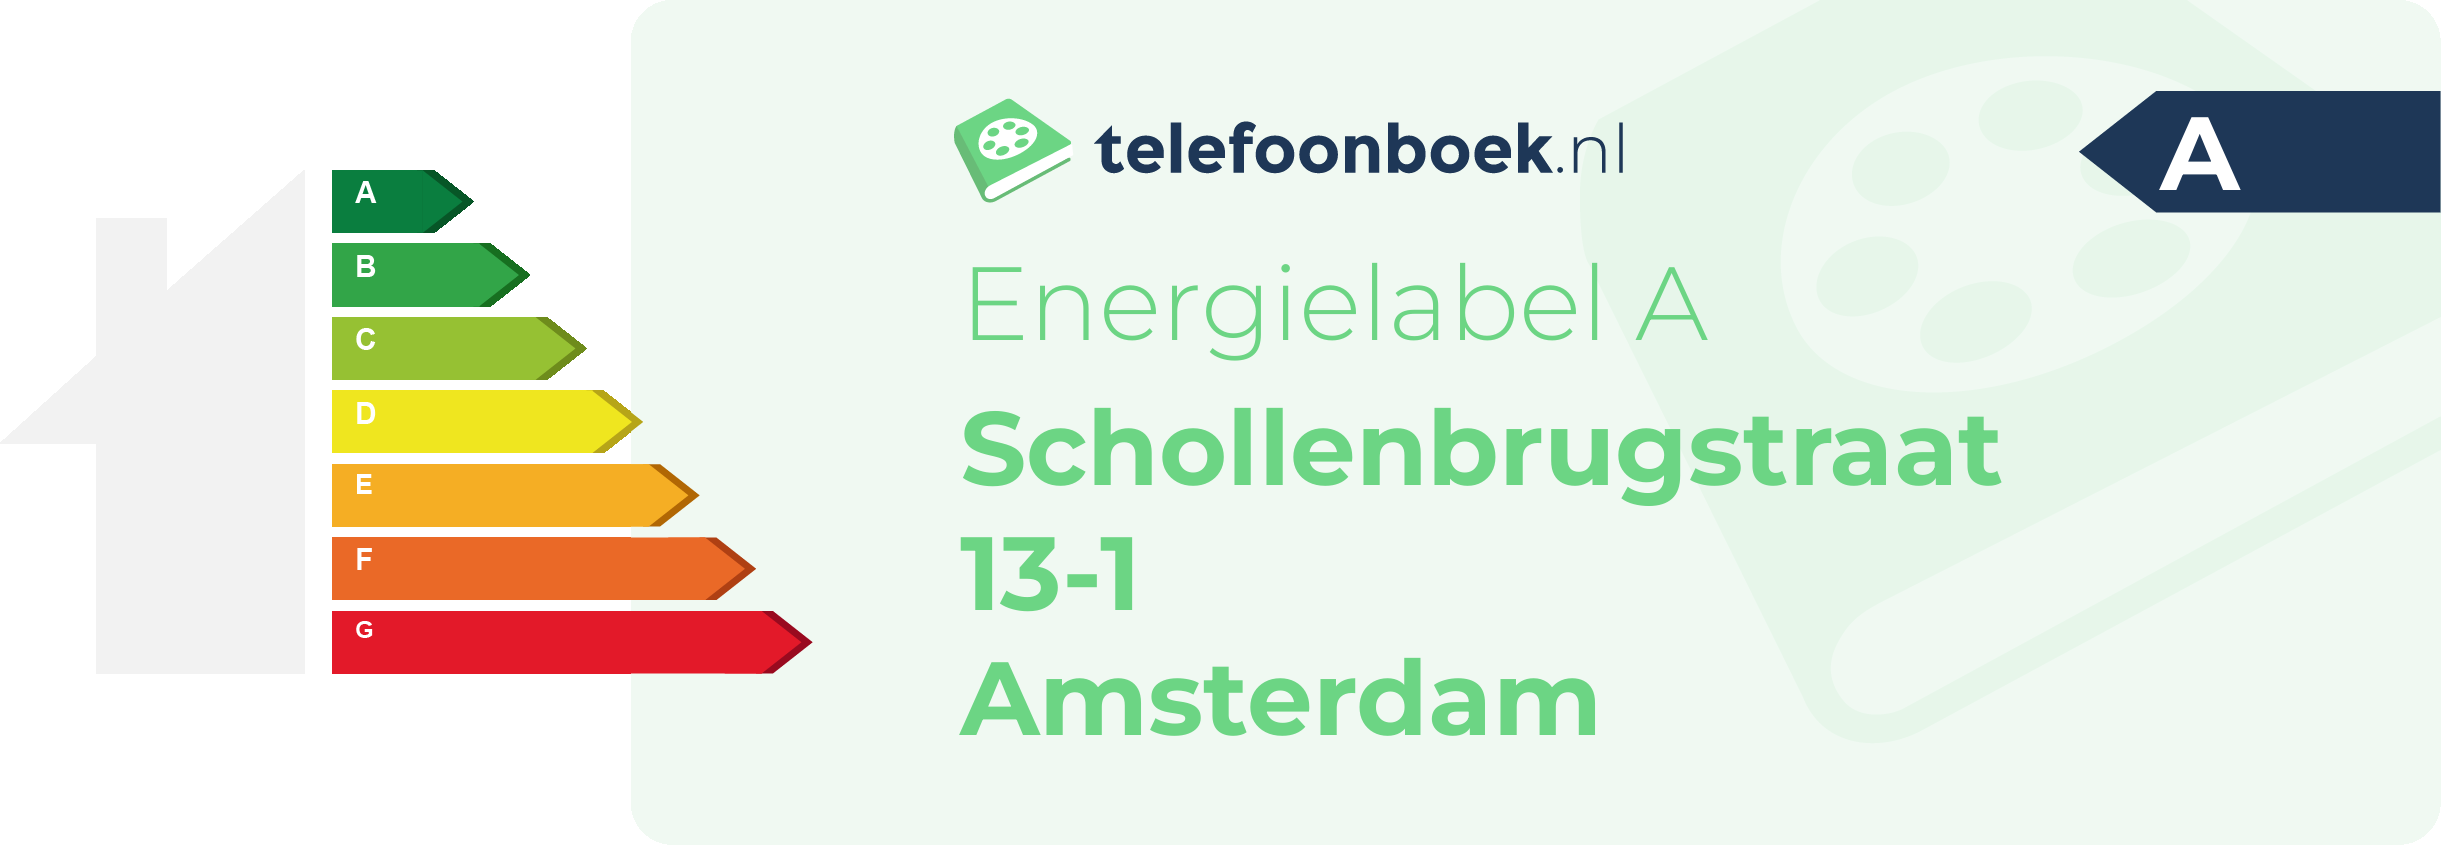 Energielabel Schollenbrugstraat 13-1 Amsterdam